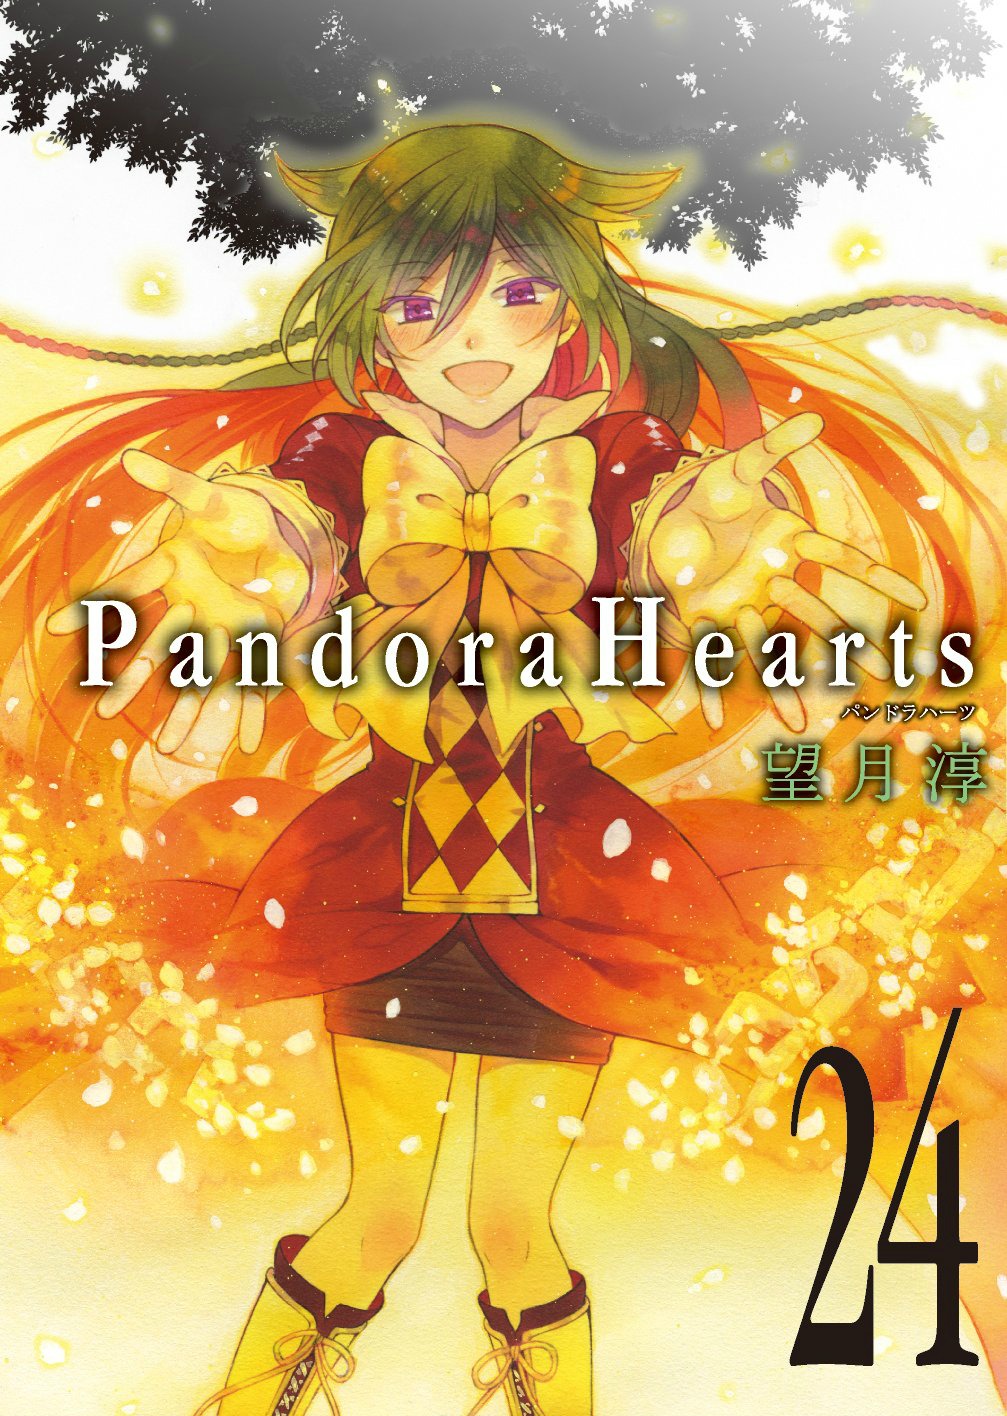 Anime Pandora Hearts HD Wallpaper by yoruangel866